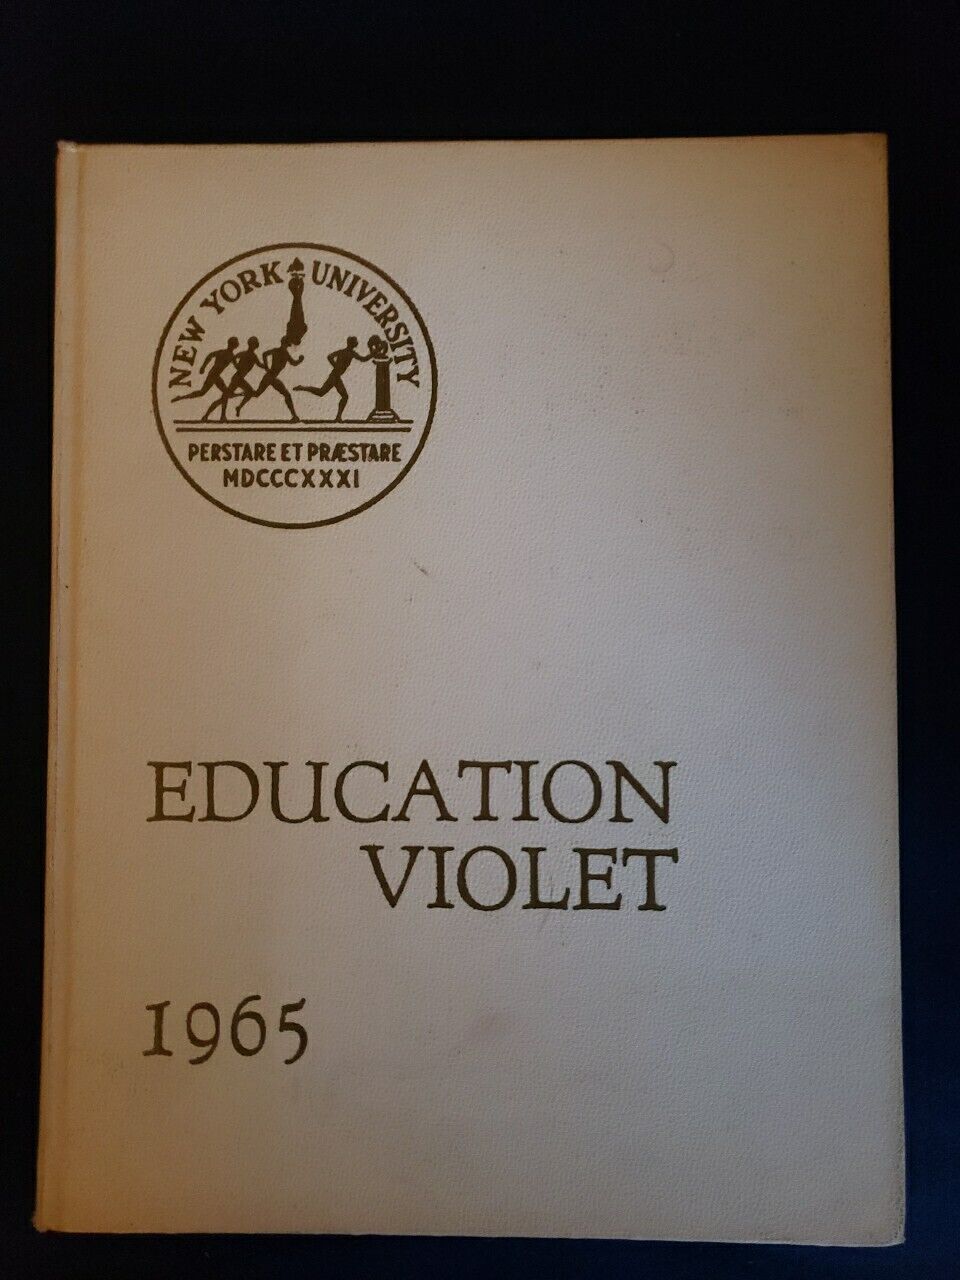 1965 New York University Yearbook, School of Education, Violet, NYU